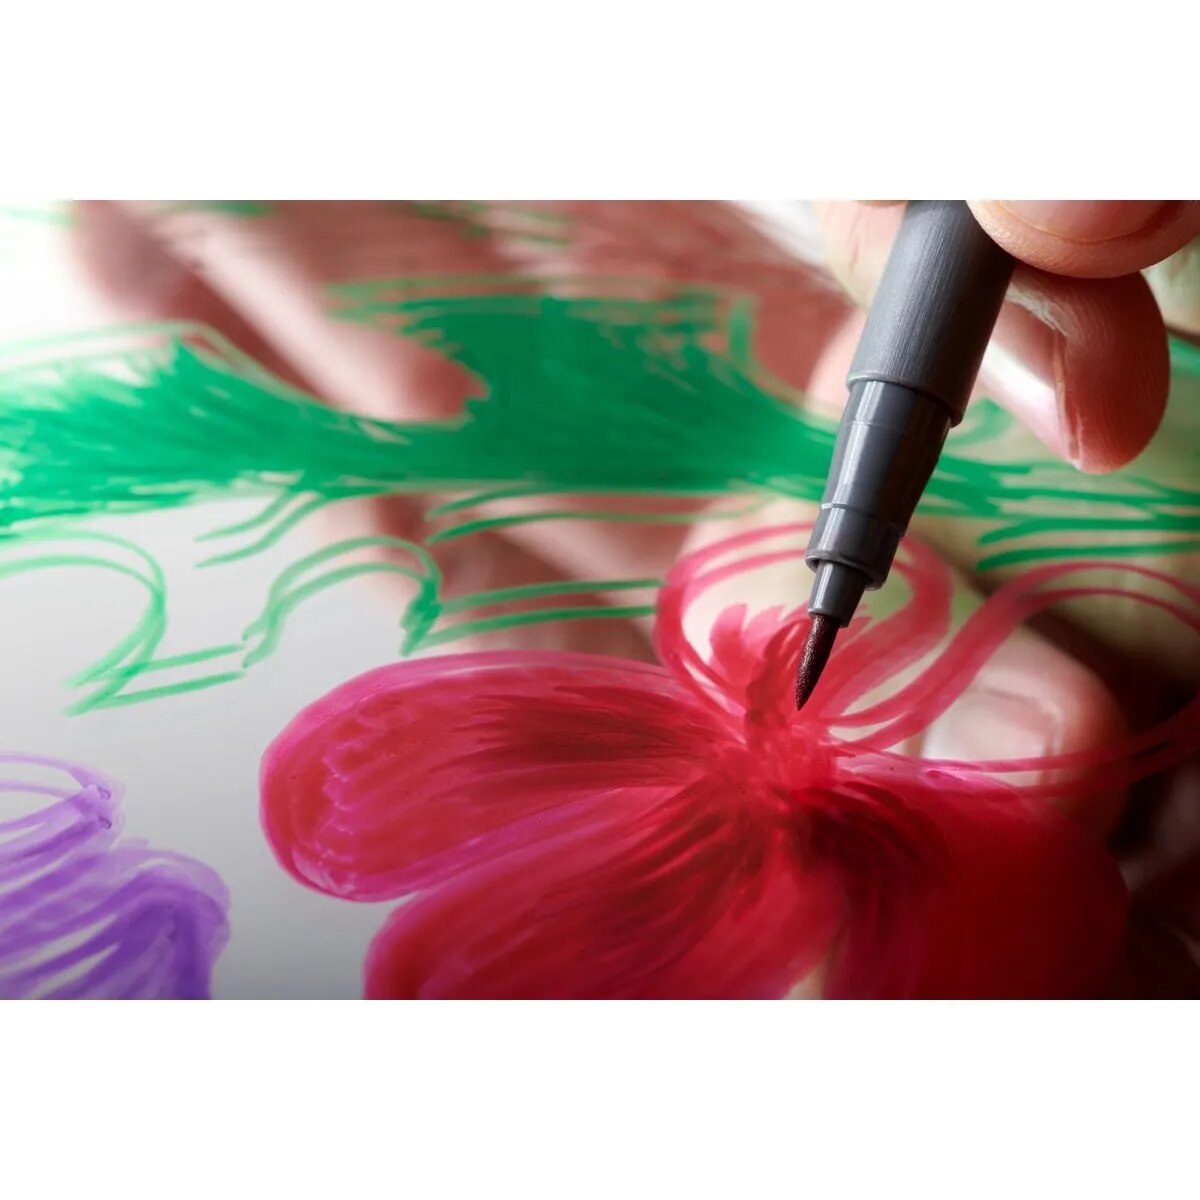 STAEDTLER® pigment brush pen 371 - warmgrau hell